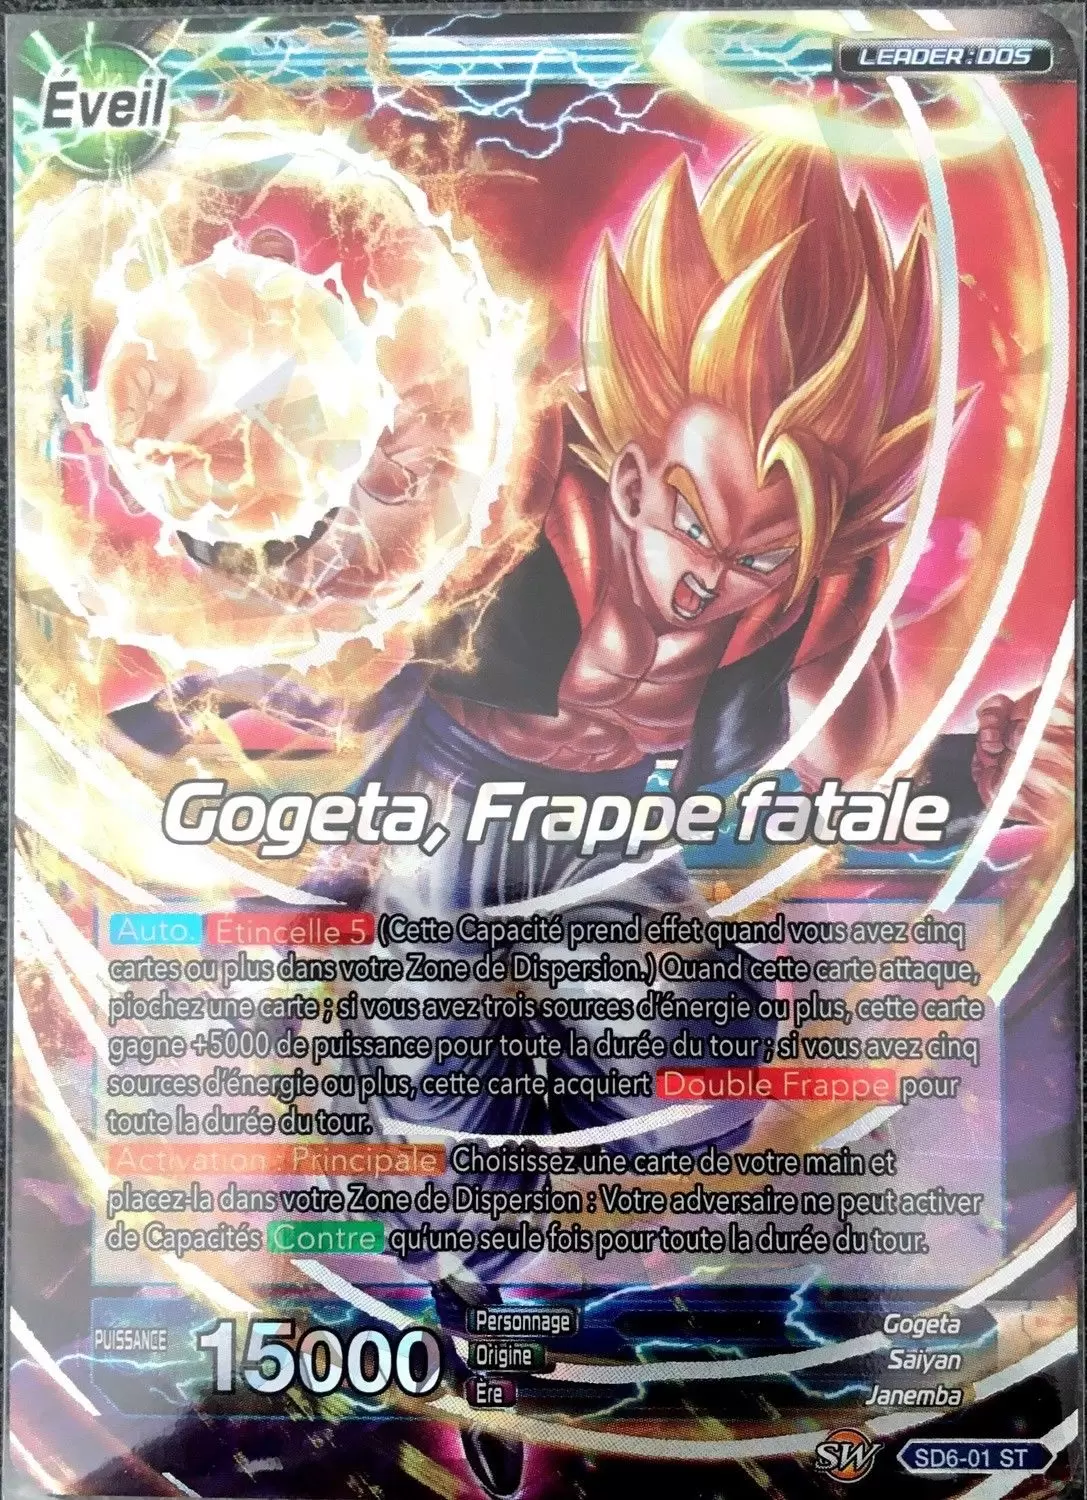 Resurrected Fusion [SD6] - Gogeta // Gogeta, Frappe fatale